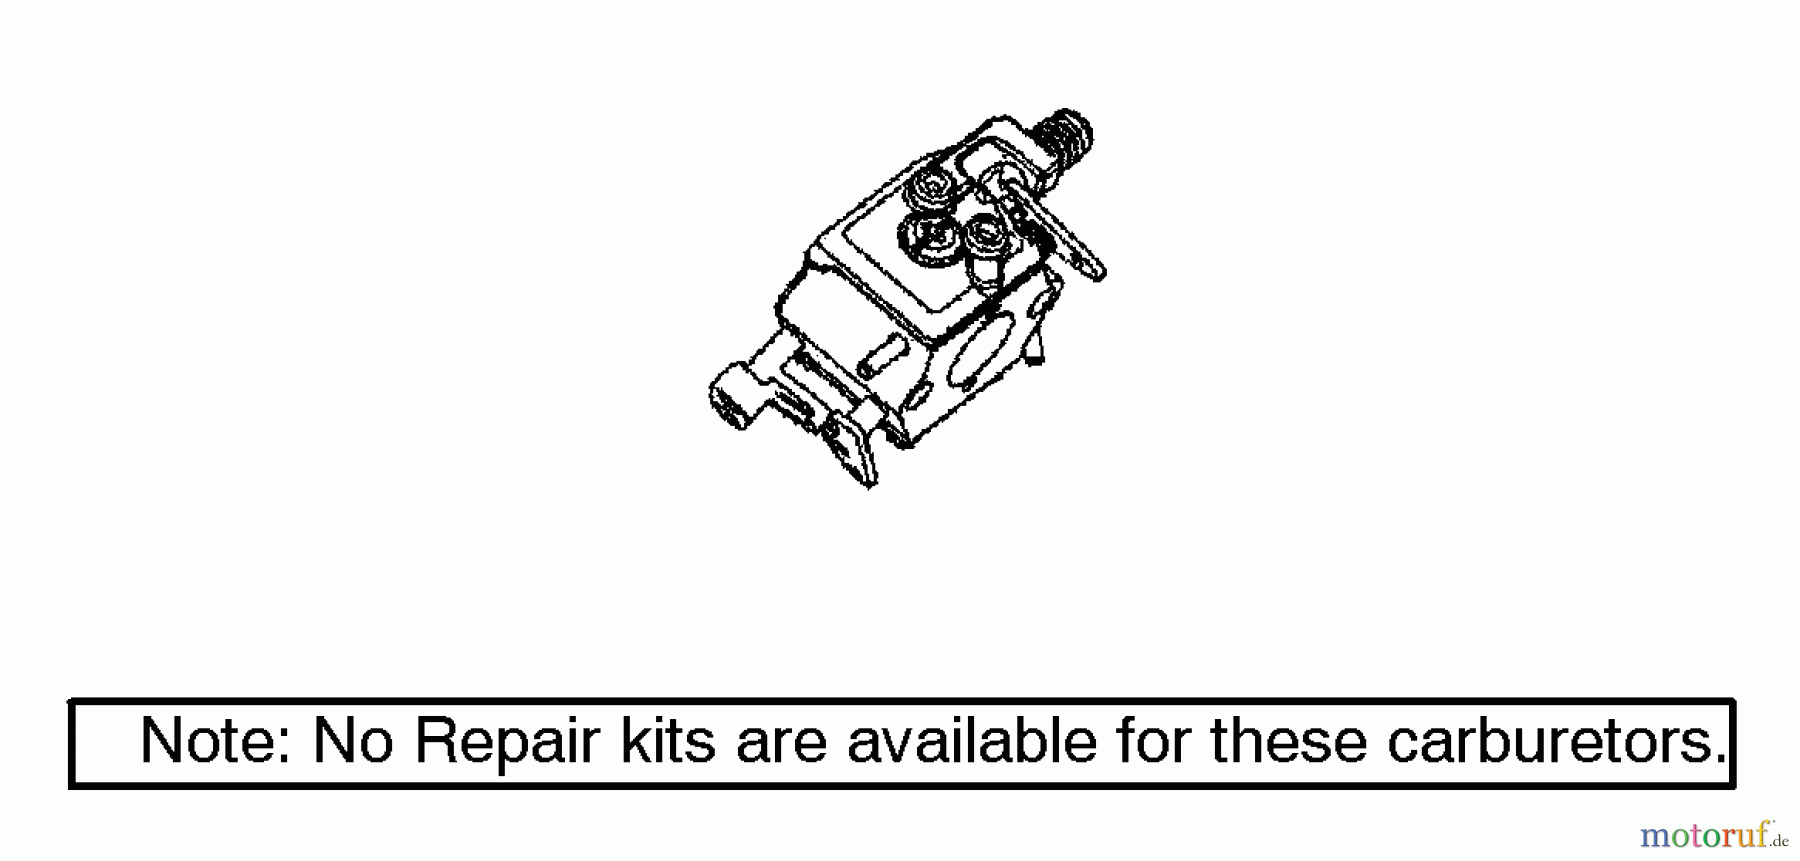  Poulan / Weed Eater Motorsägen 2150 (Type 3) - Poulan Woodshark / Woodsman Chainsaw Carburetor Assembly Kits 530071620/530071820/530071821